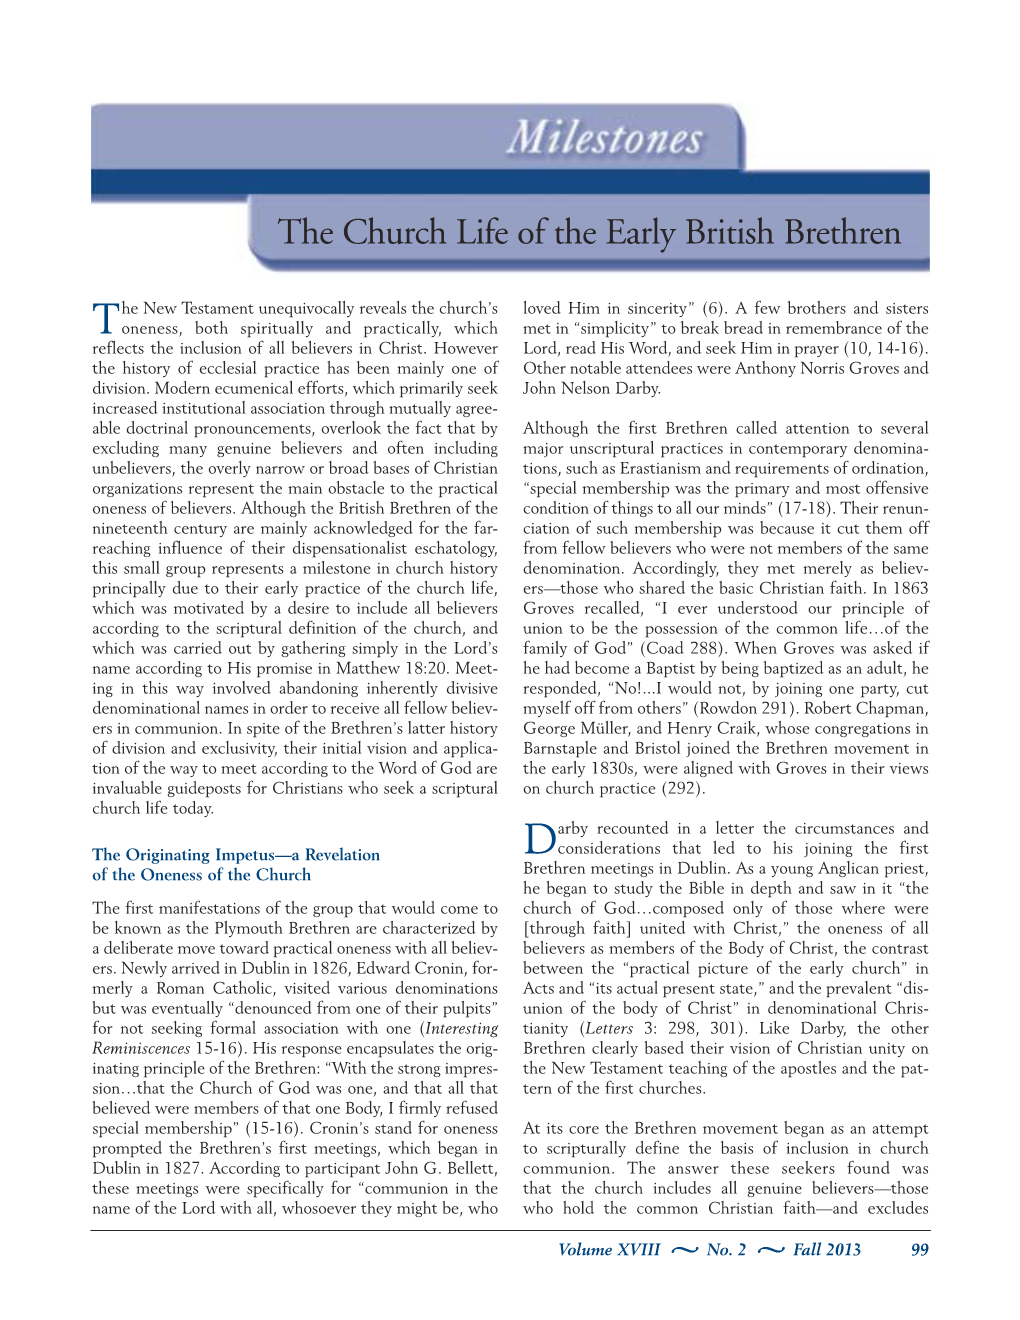 Milestones the Church Life of the Early British Brethren